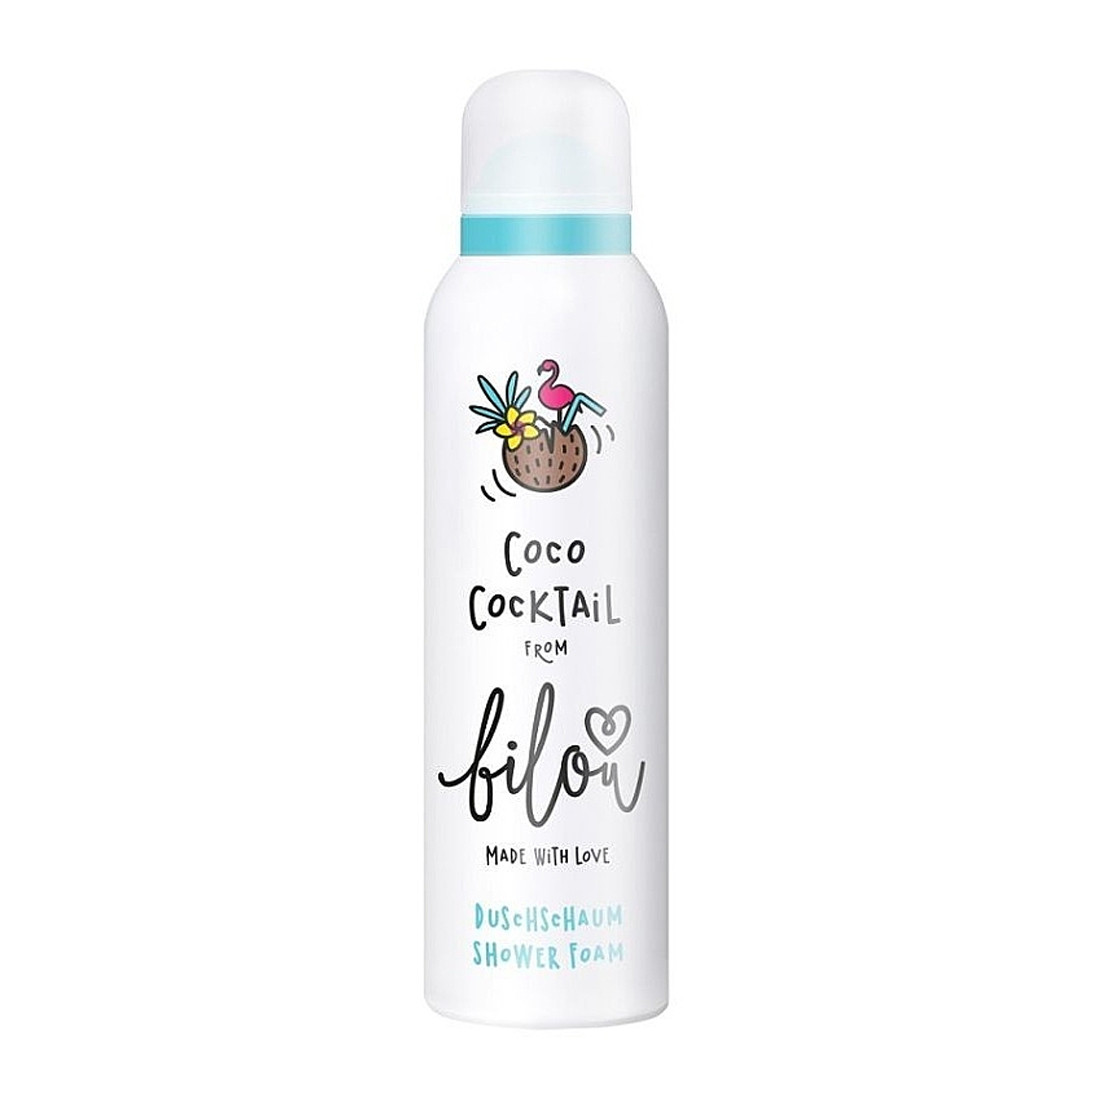 Bilou Coco Cocktail Creamy Shower Foam - Пенка для душа